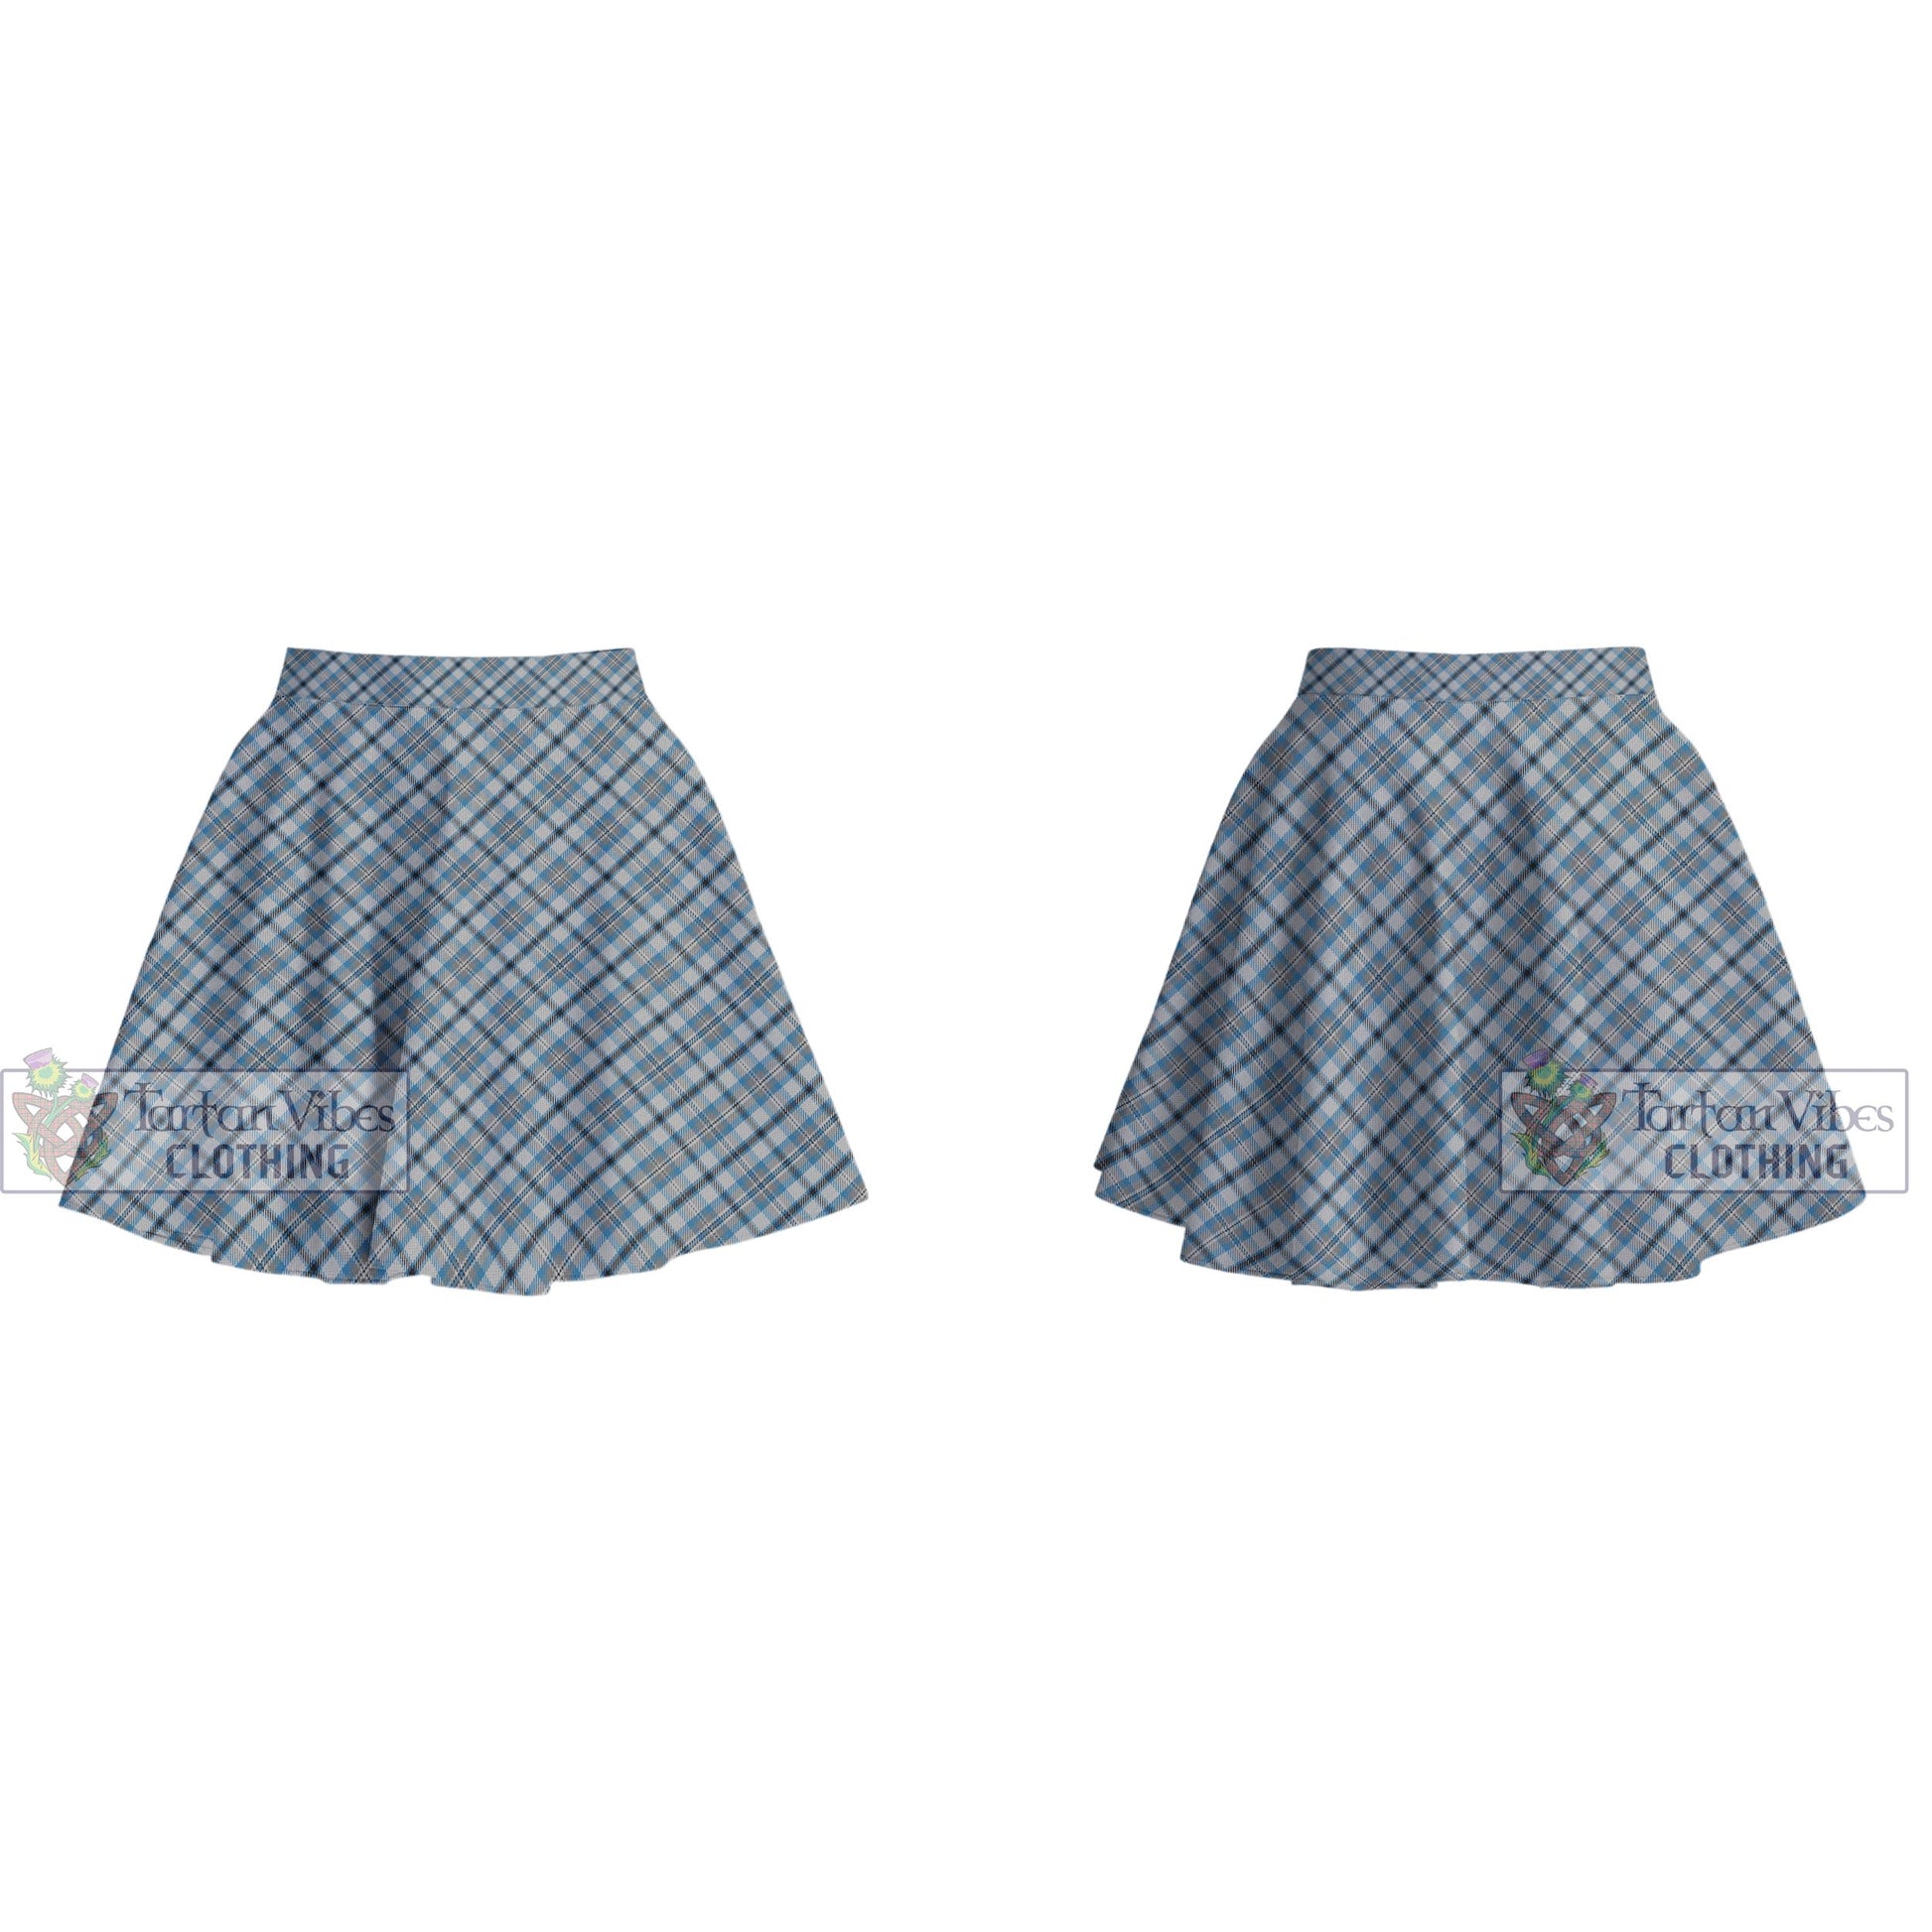 Tartan Vibes Clothing Conquergood Tartan Women's Plated Mini Skirt